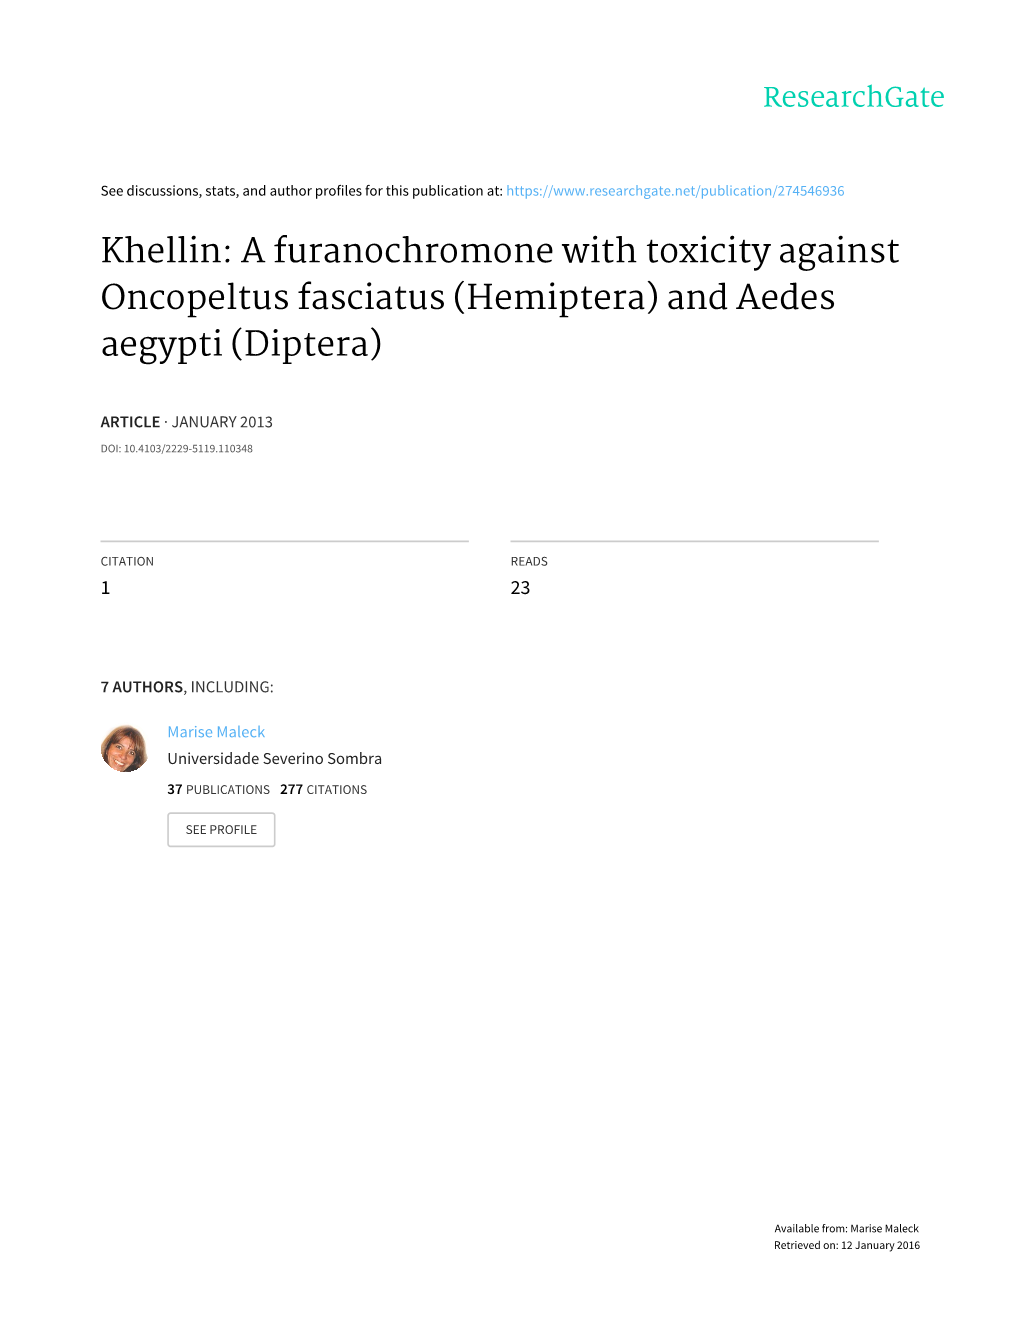 Khellin: a Furanochromone with Toxicity Against Oncopeltus Fasciatus (Hemiptera) and Aedes Aegypti (Diptera)